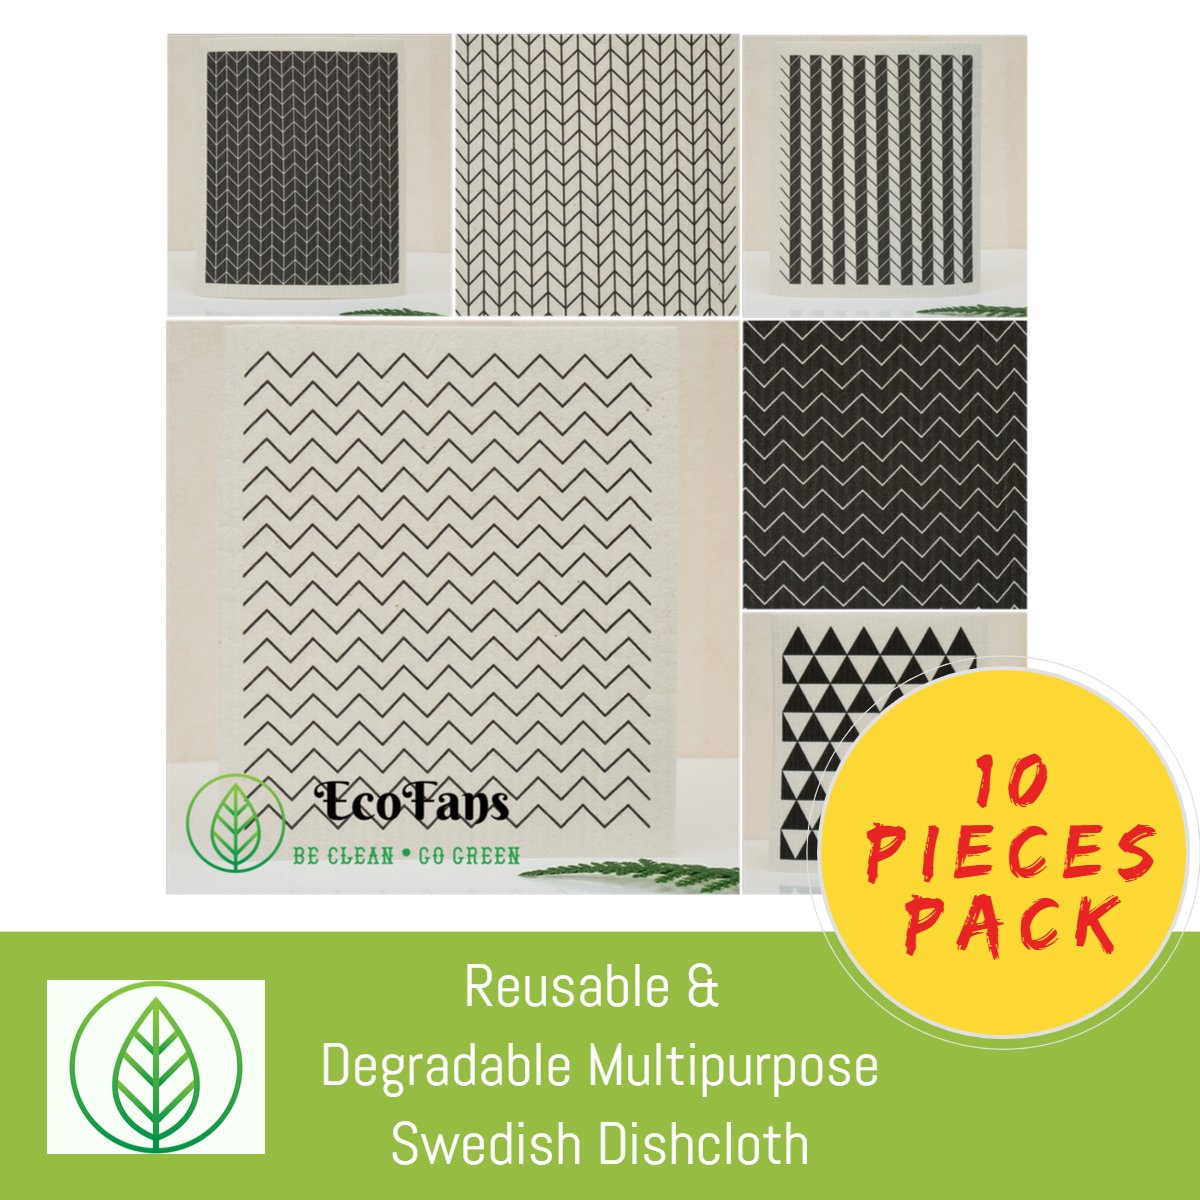 KT051-X-10-Reusable & Degradable Multipurpose Swedish Dishcloth-Cloth-ecofans-10-Tiles-